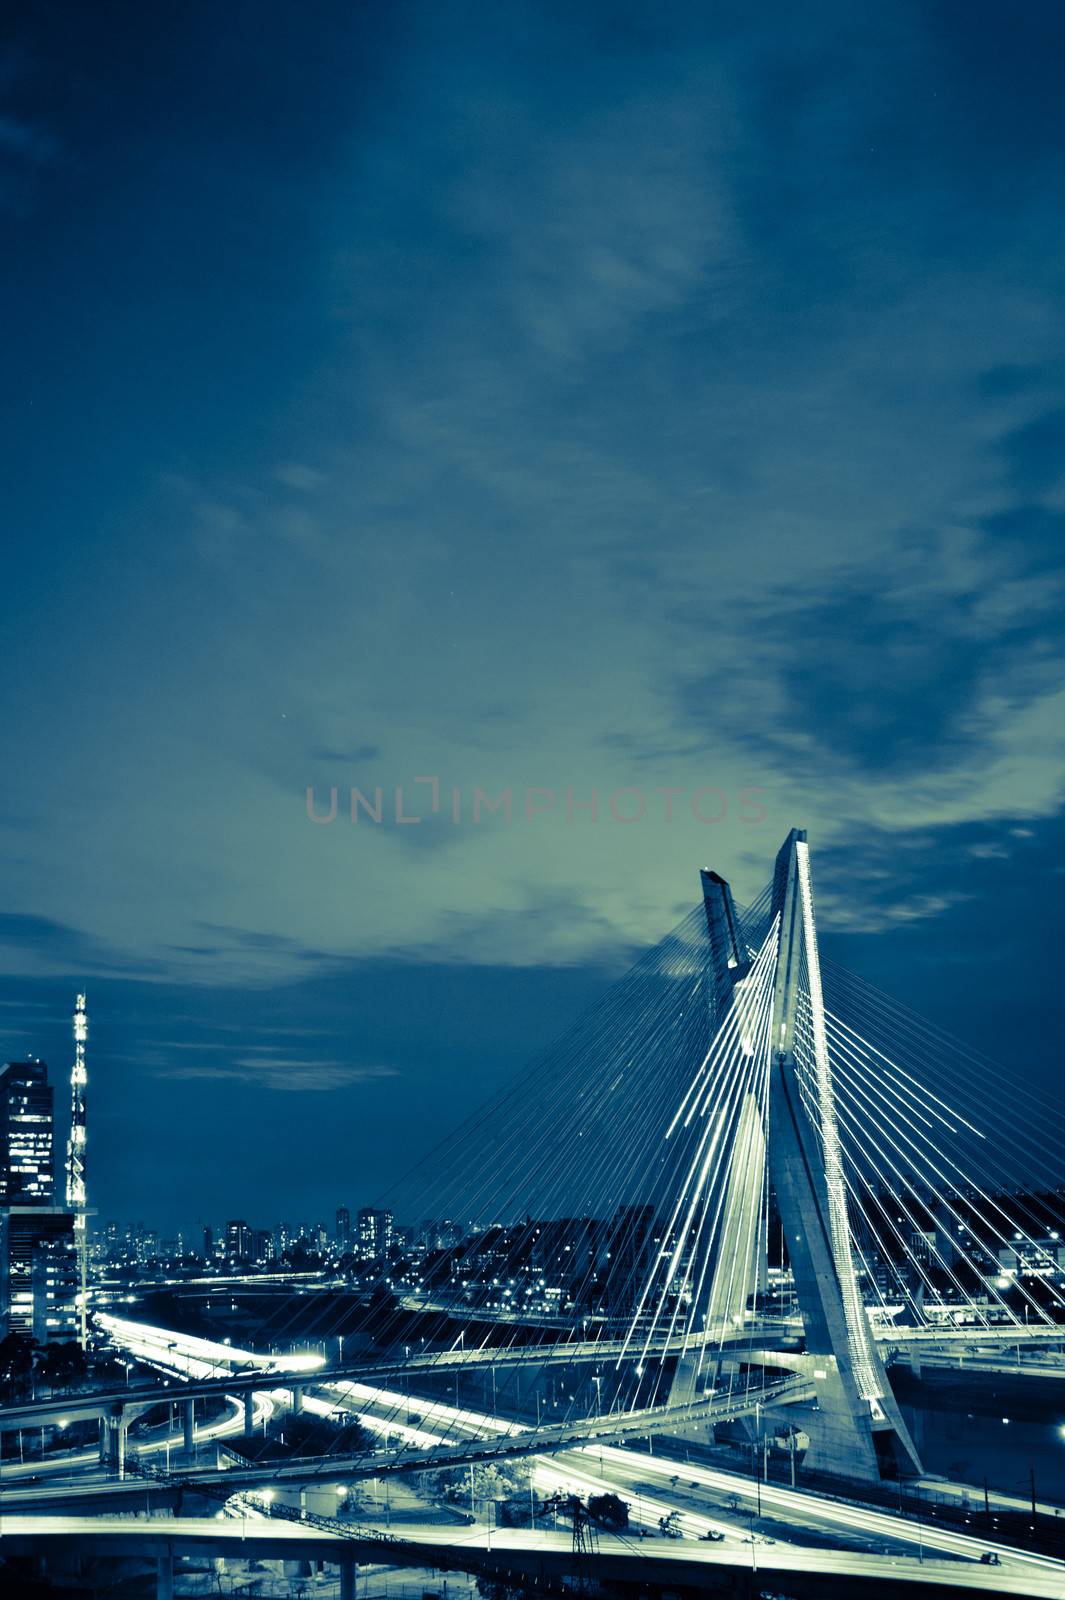 Bridge in Sao Paulo city by CelsoDiniz